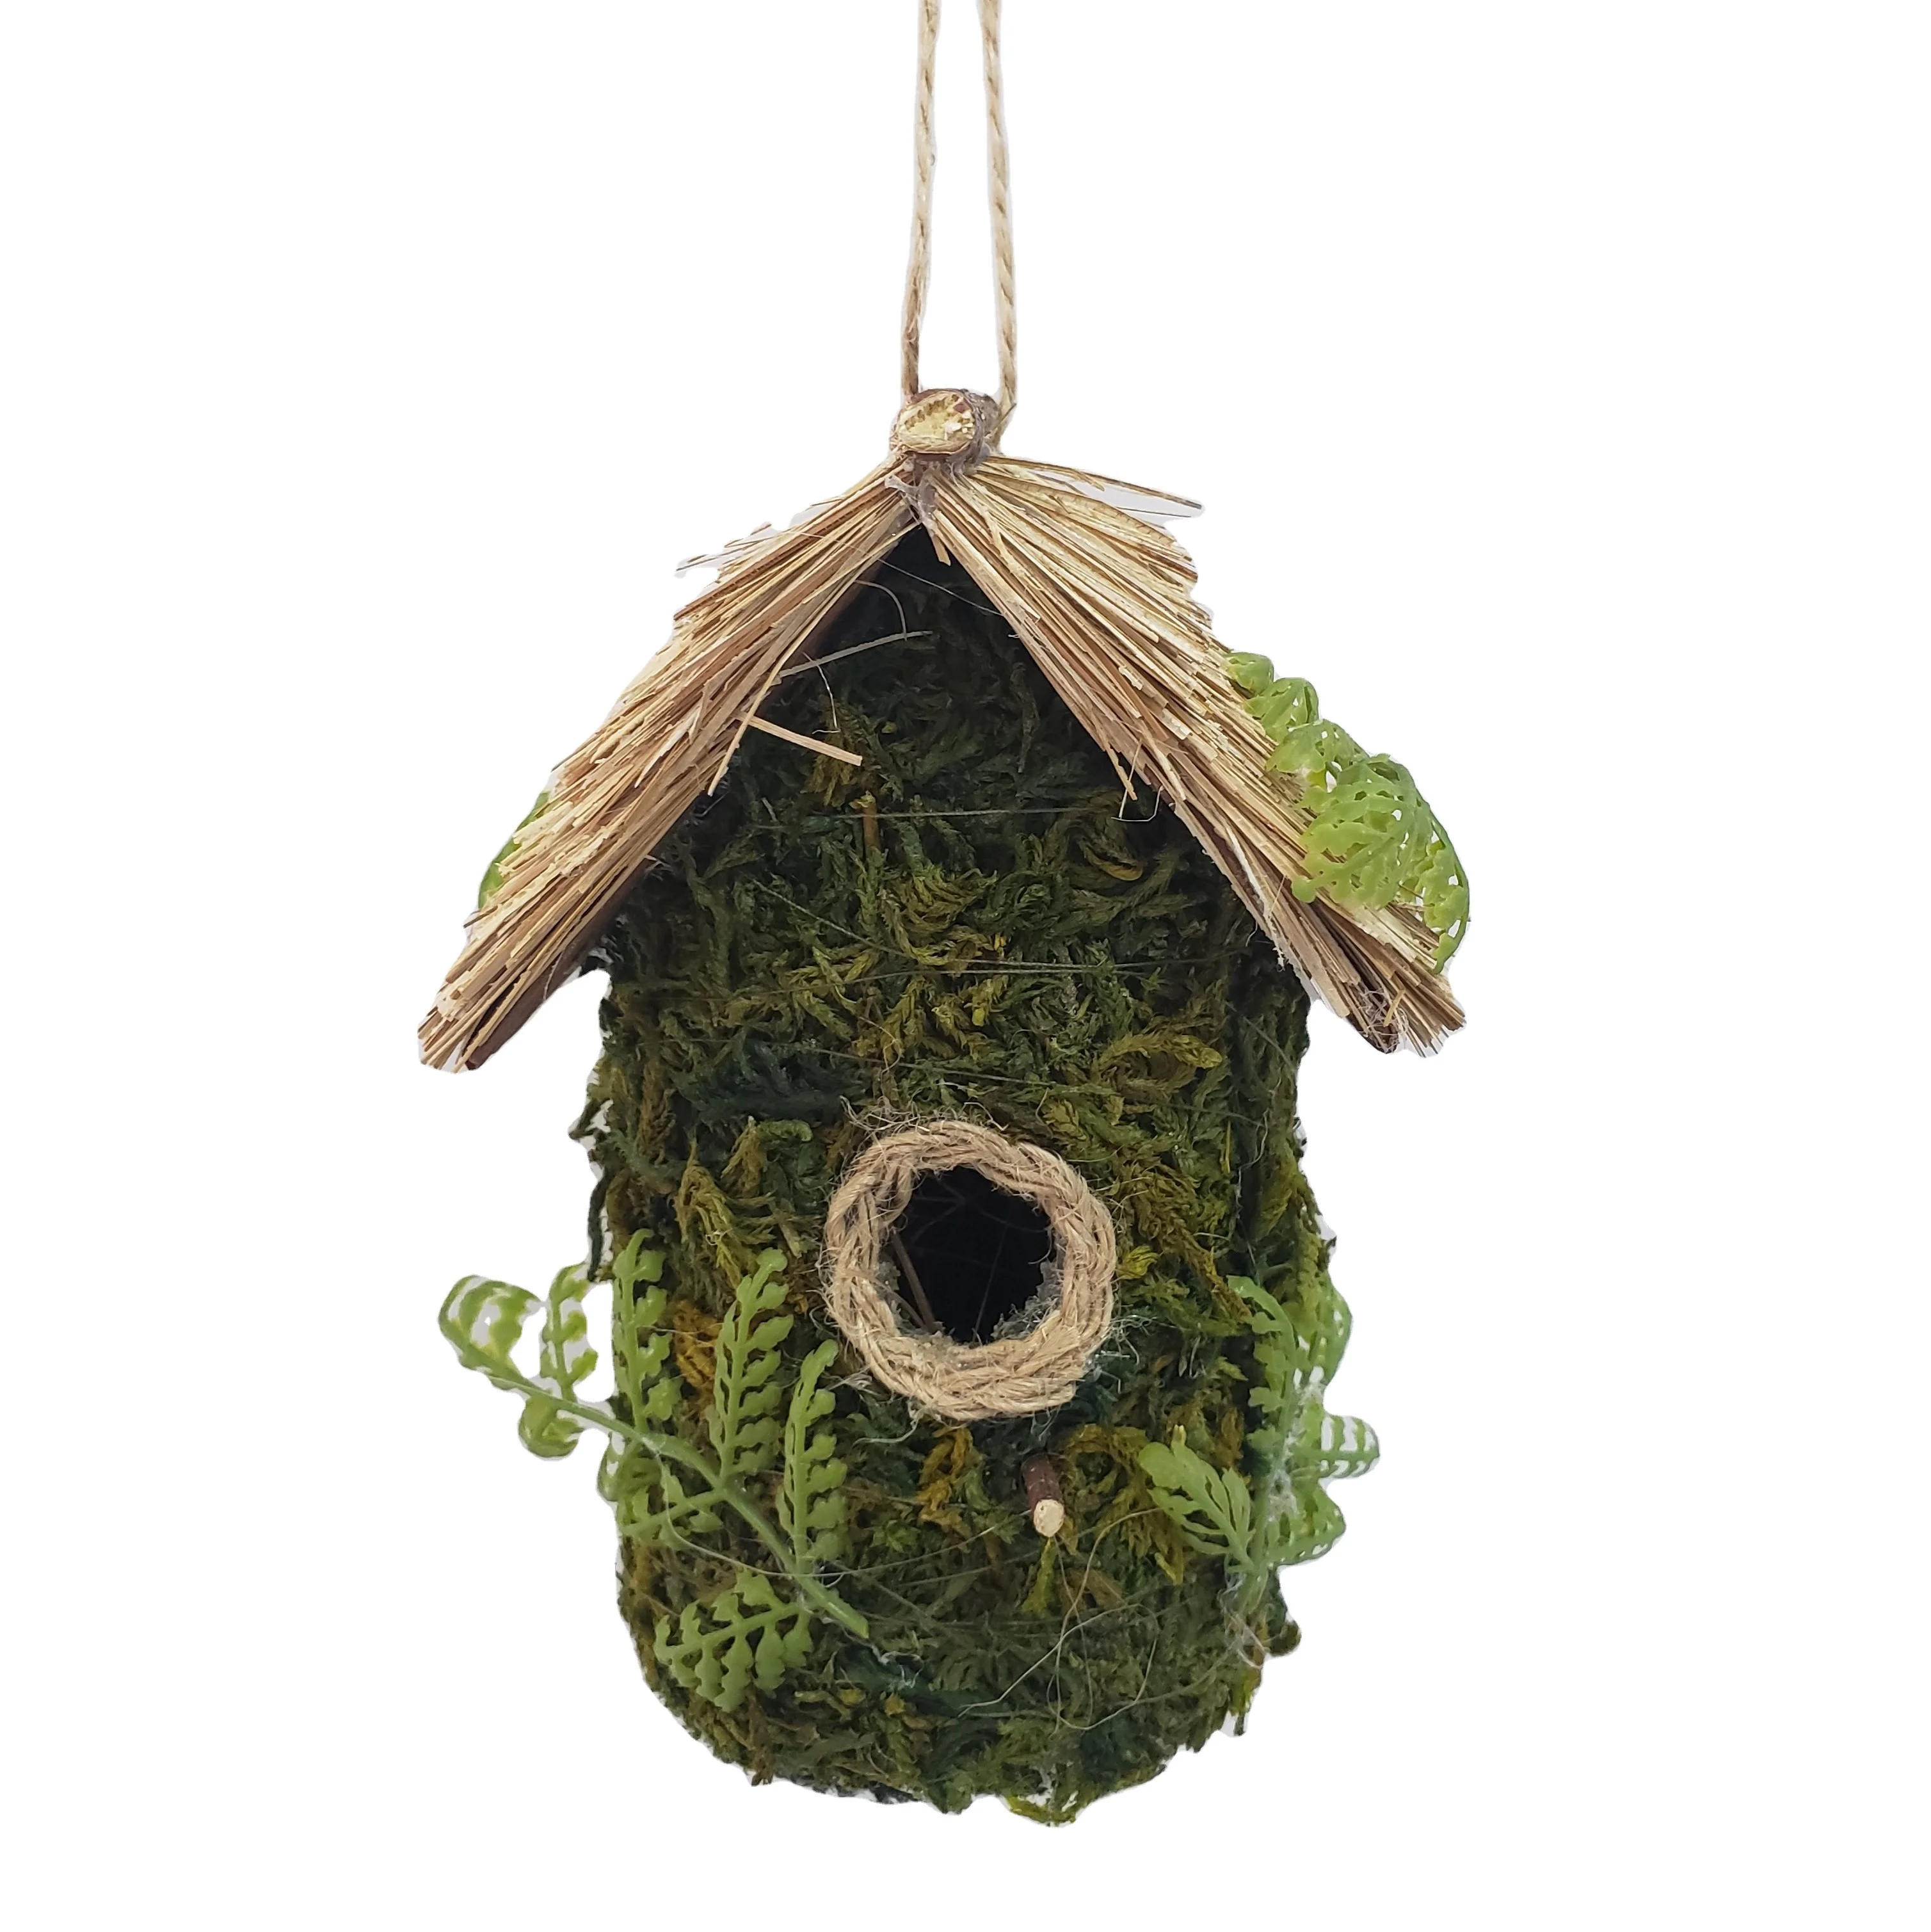 鸟屋orn - buy bird house orn decoration,bird house outdoor orn